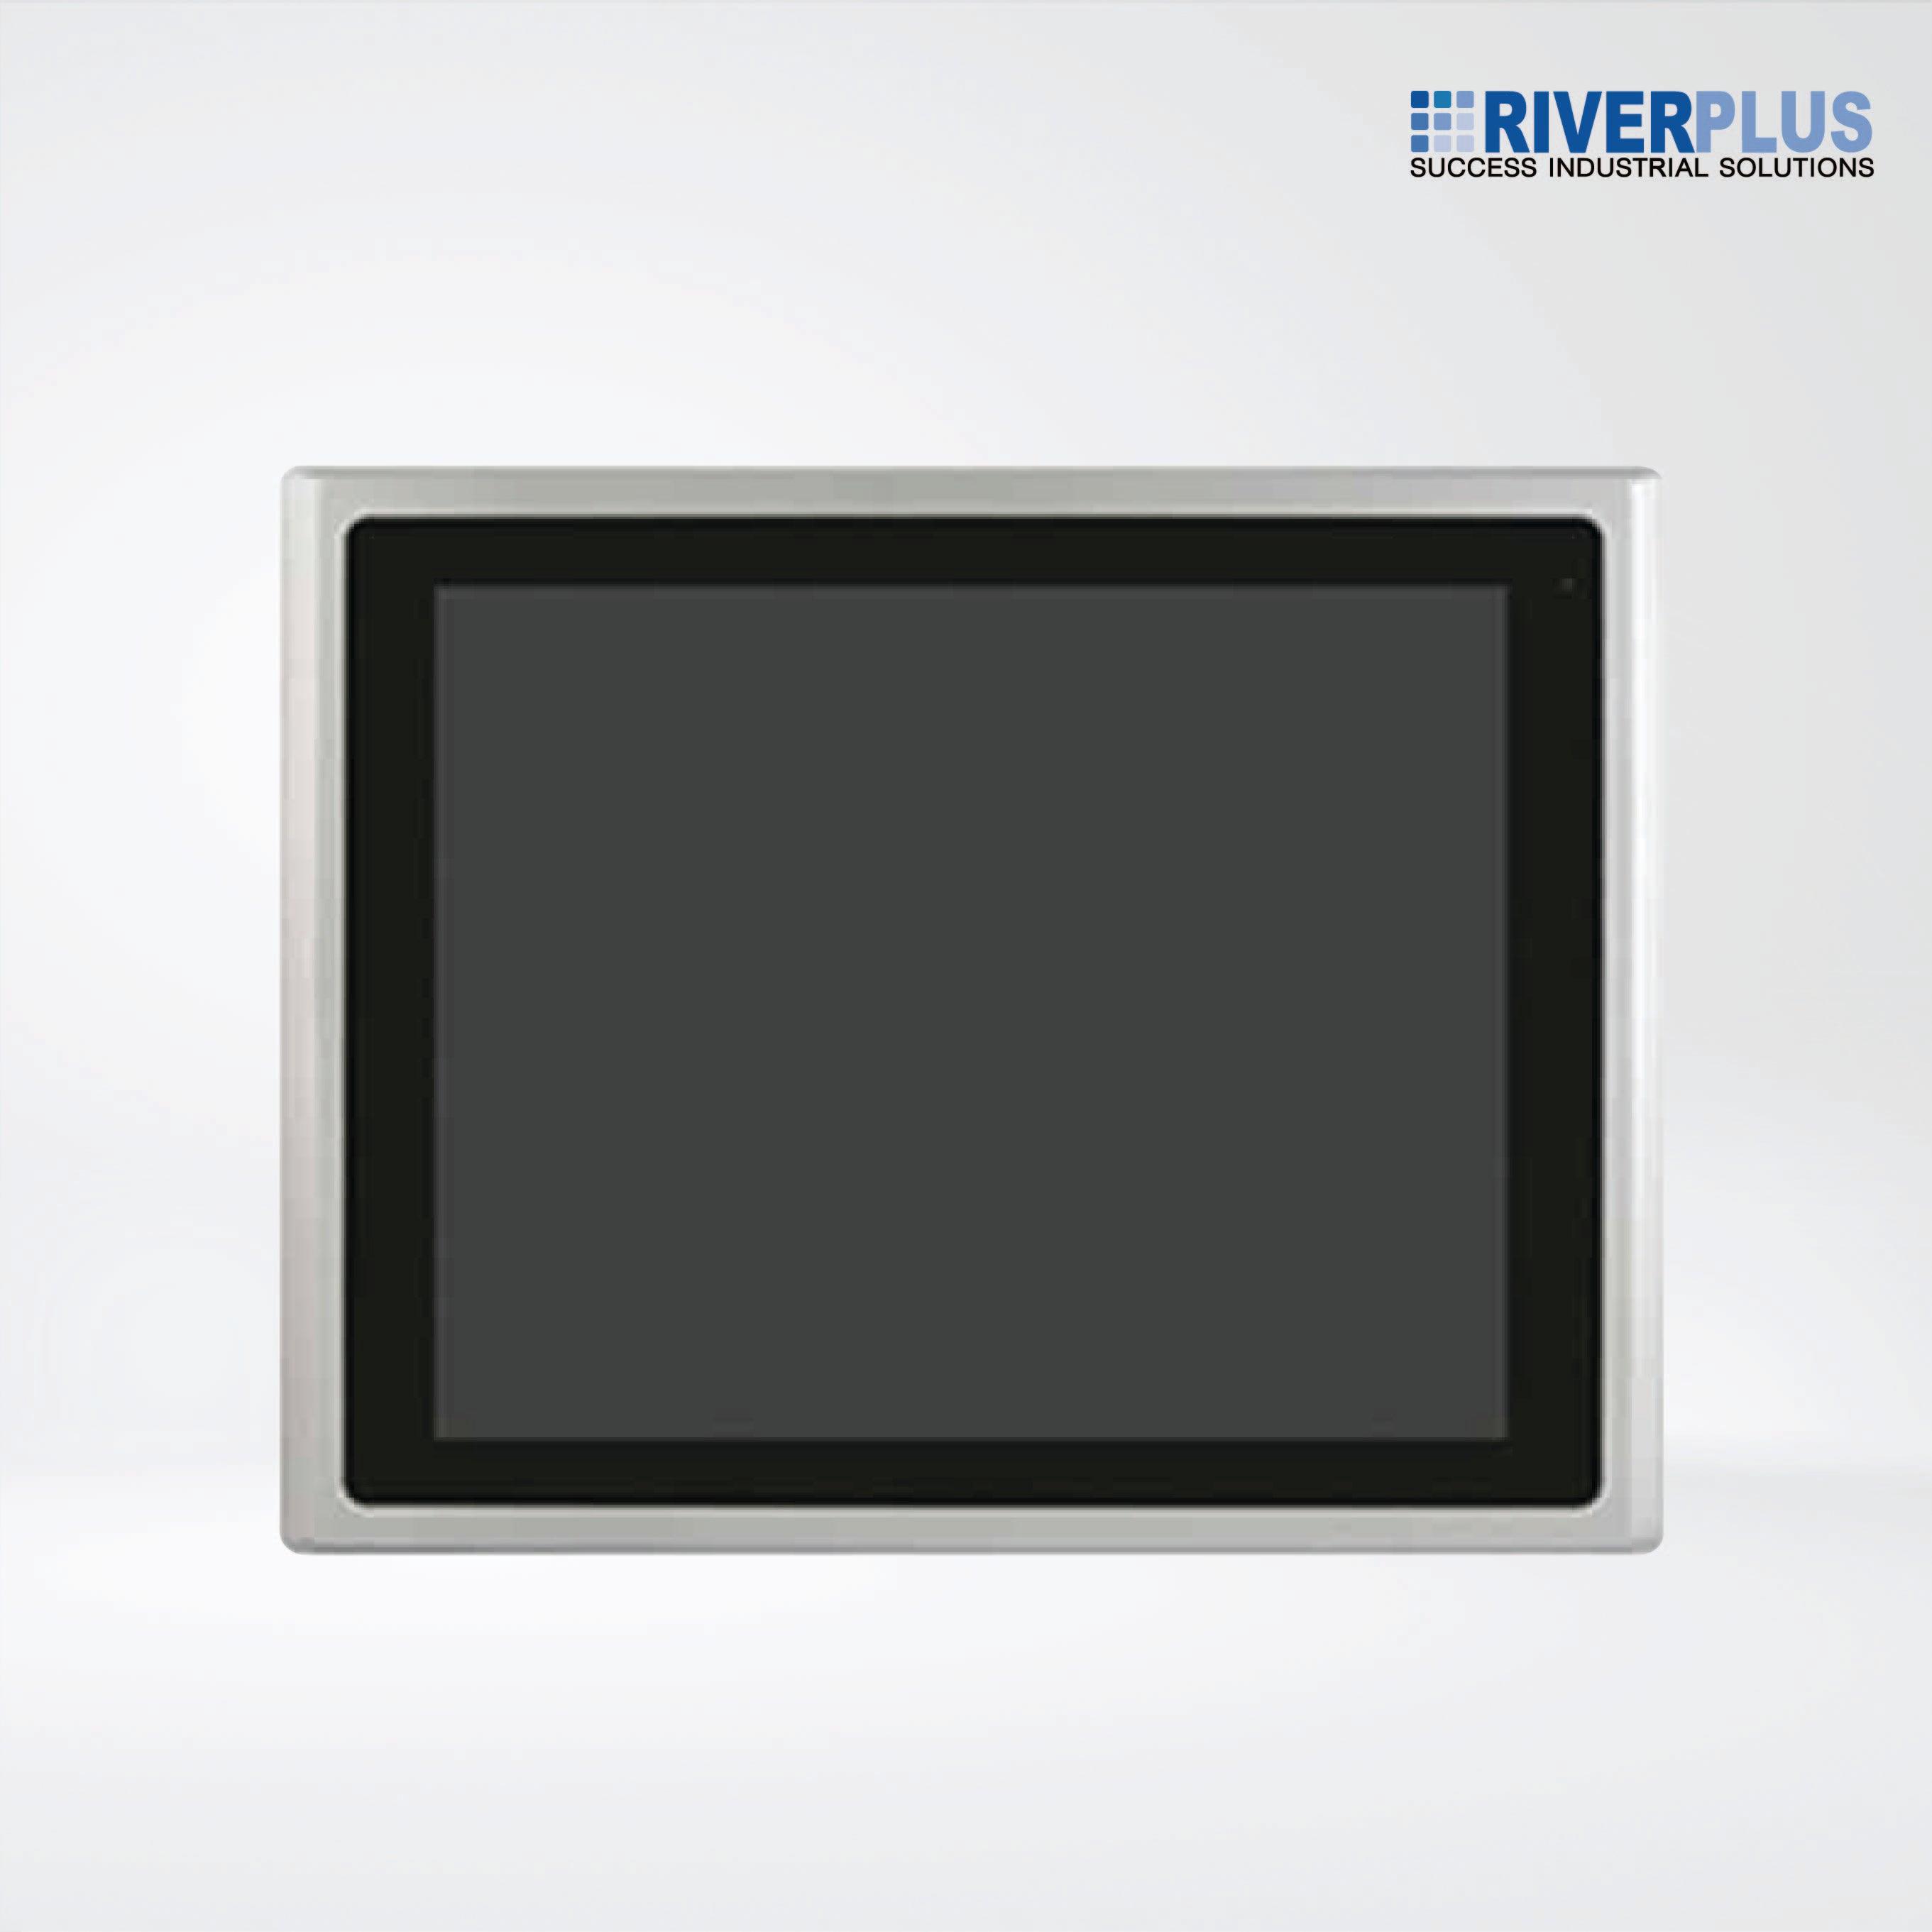 ARCHMI-912AR Intel 6th Gen. Core i3/i5, Fanless Industrial Compact Size Panel PC - Riverplus